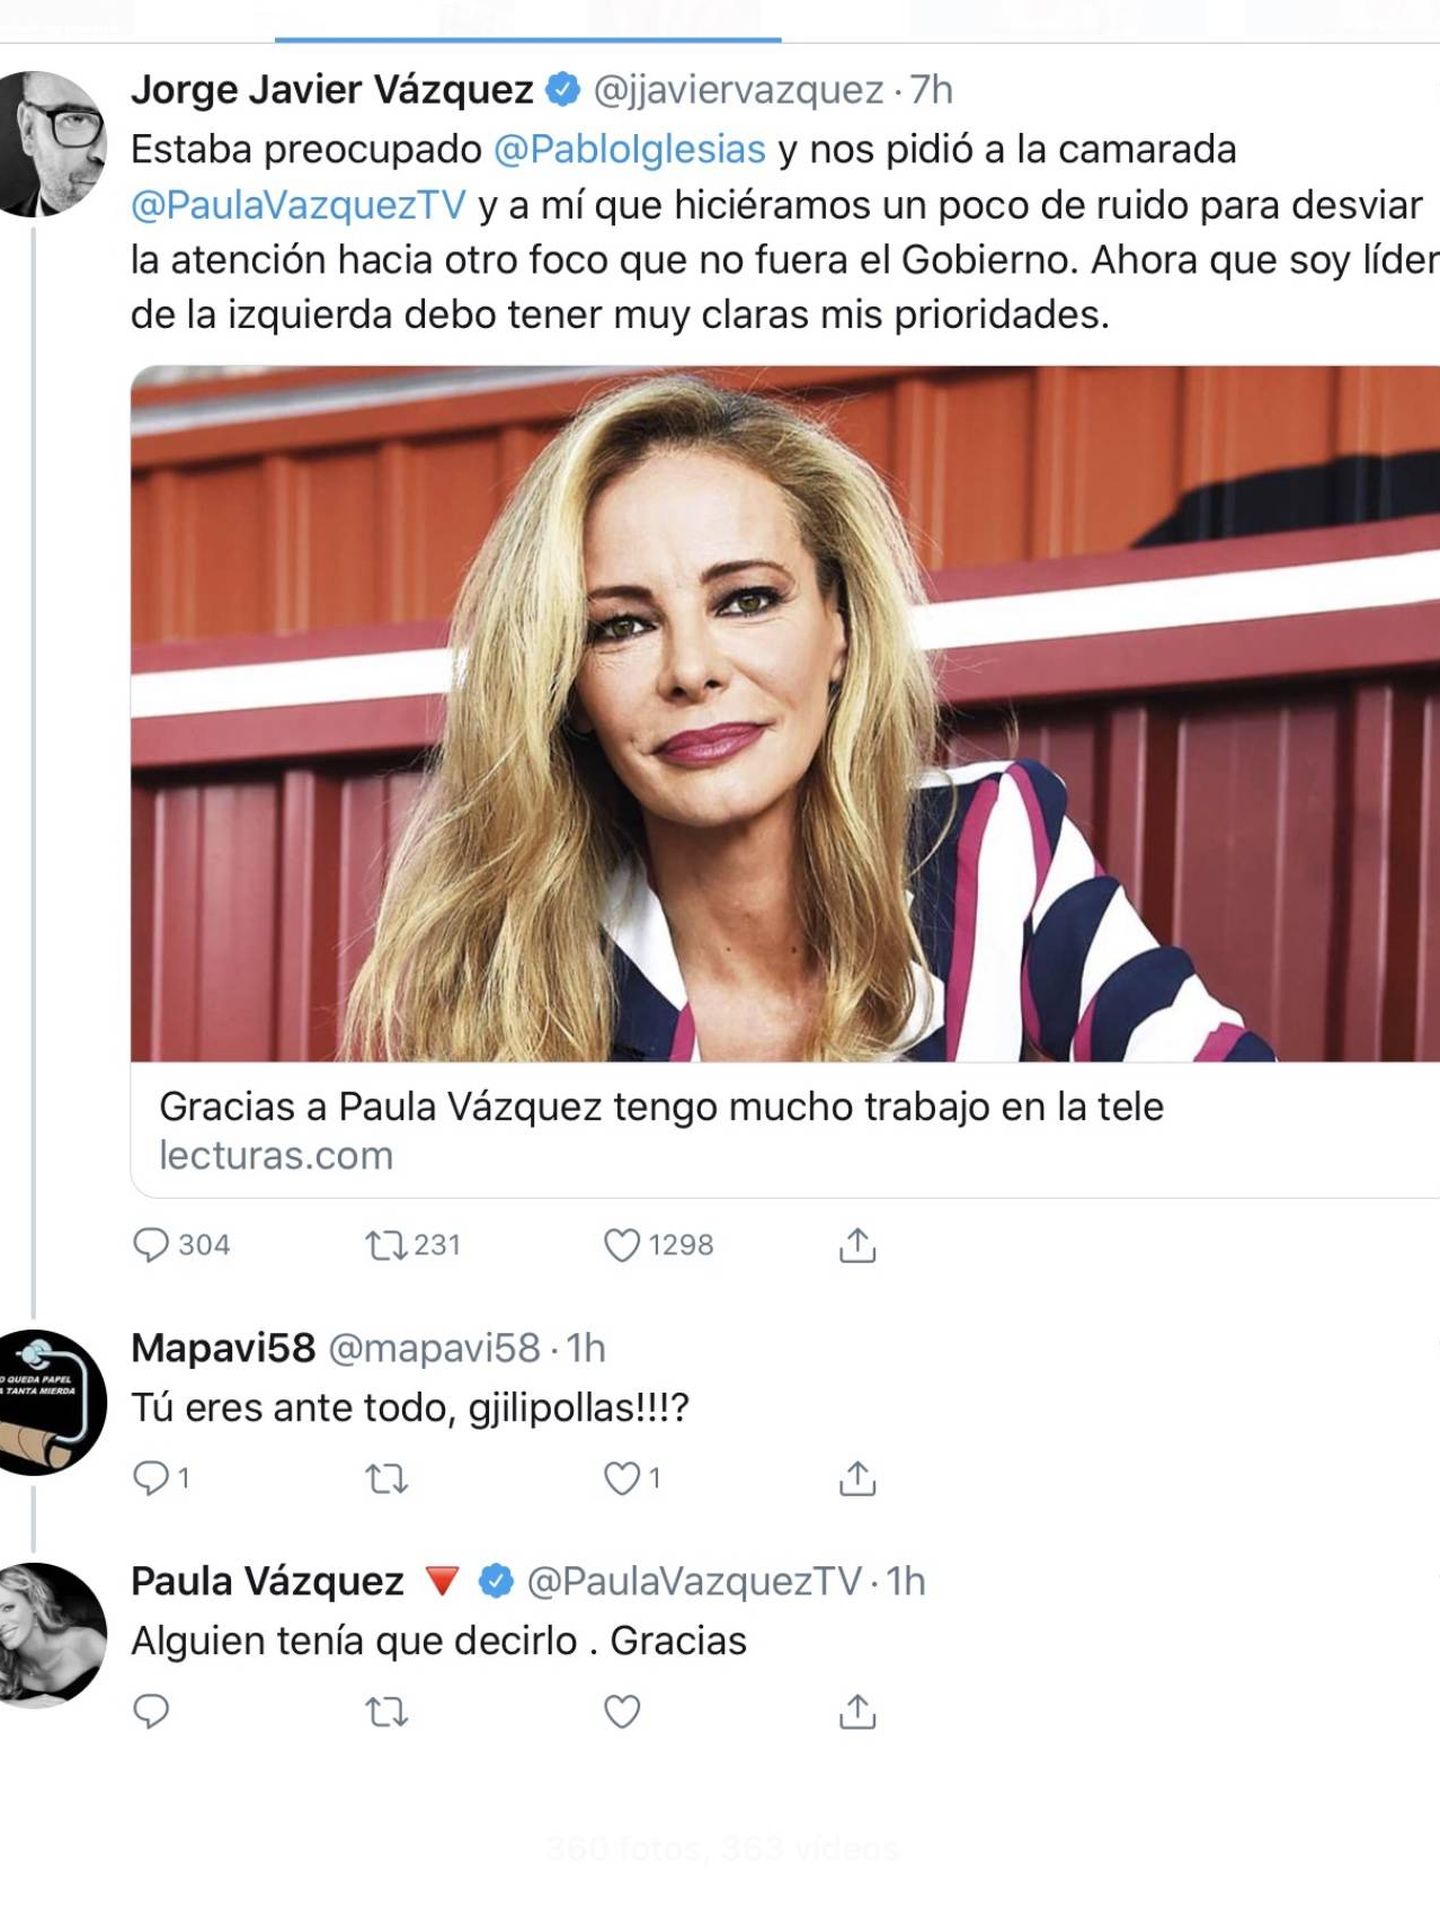 Respuesta de Paula Vázquez en Twitter